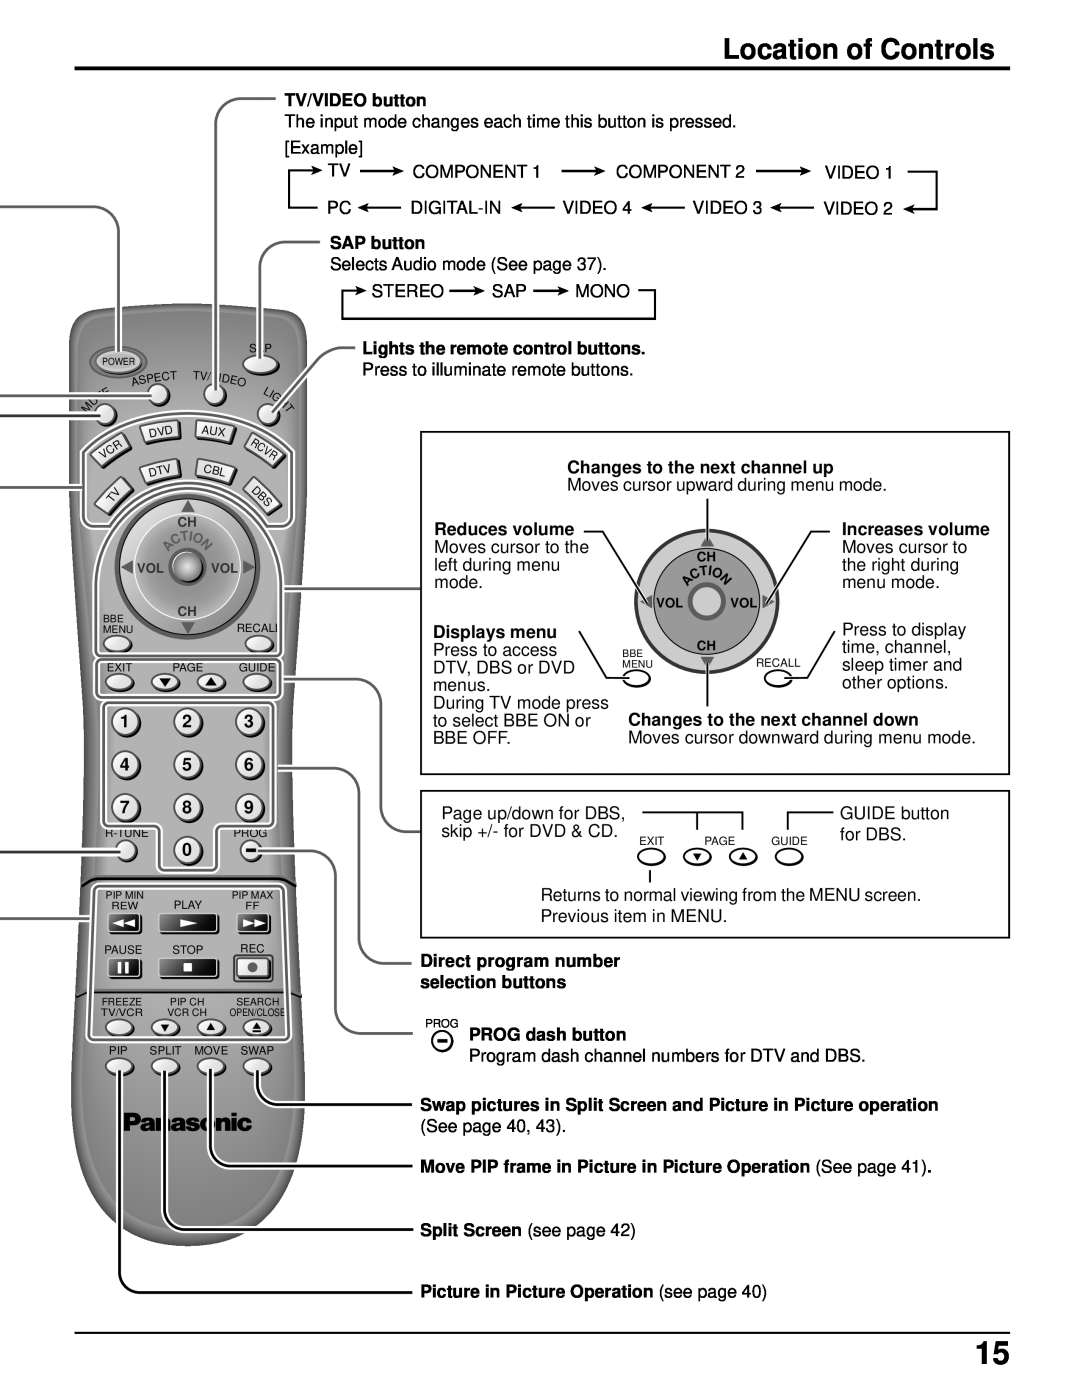 Panasonic PT 52DL52 Location of Controls, TV/VIDEO button, SAP button, Lights the remote control buttons, Displays menu 